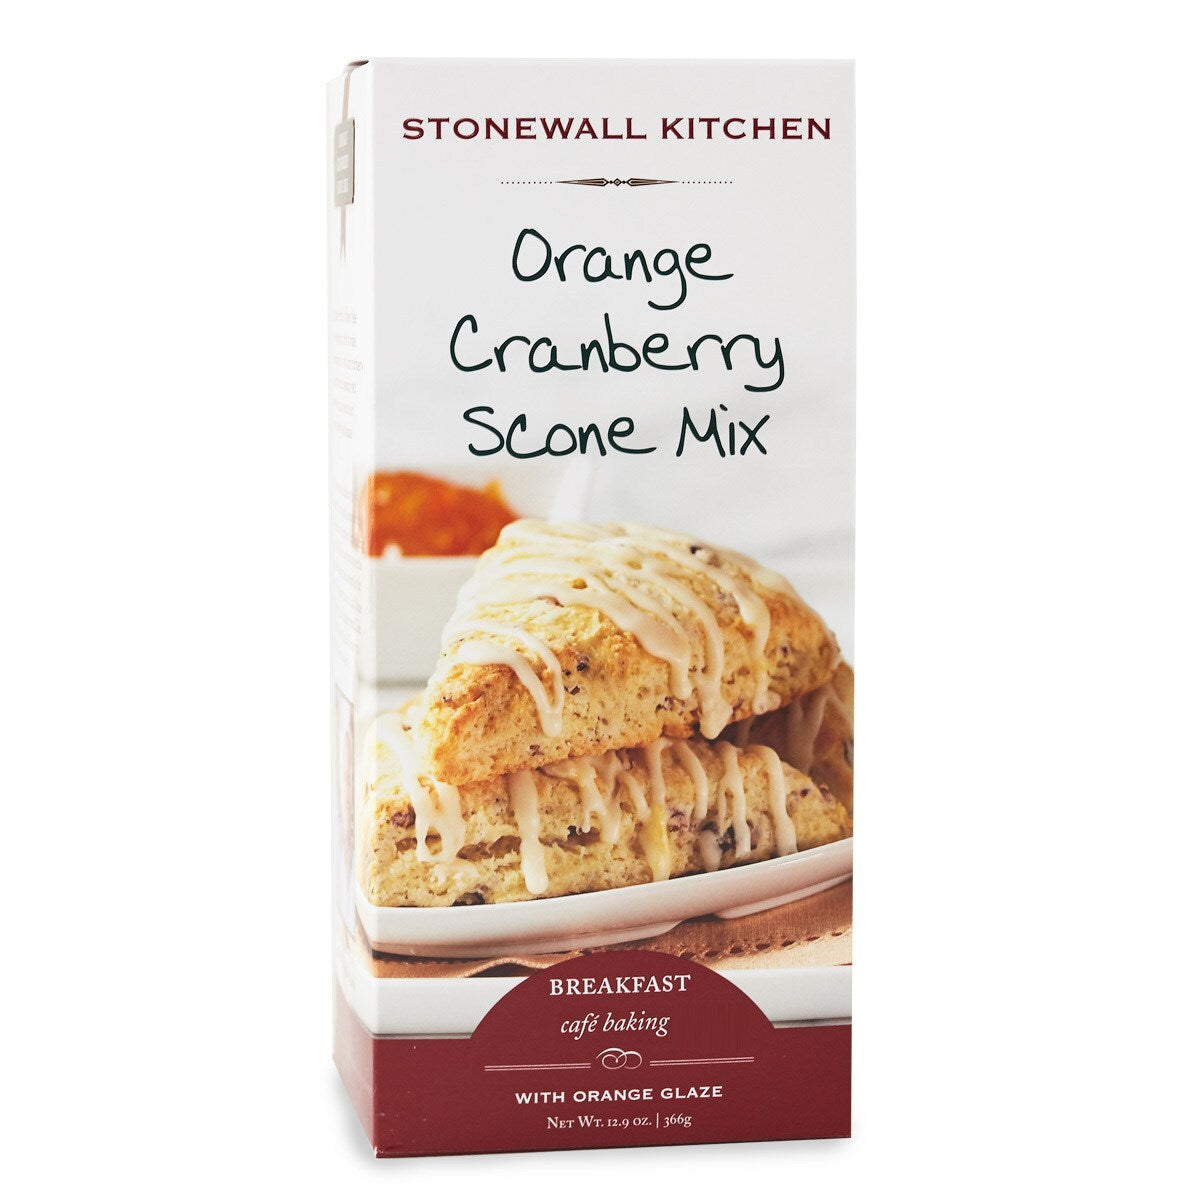 Orange Cranberry Scone Mix with Orange Glaze